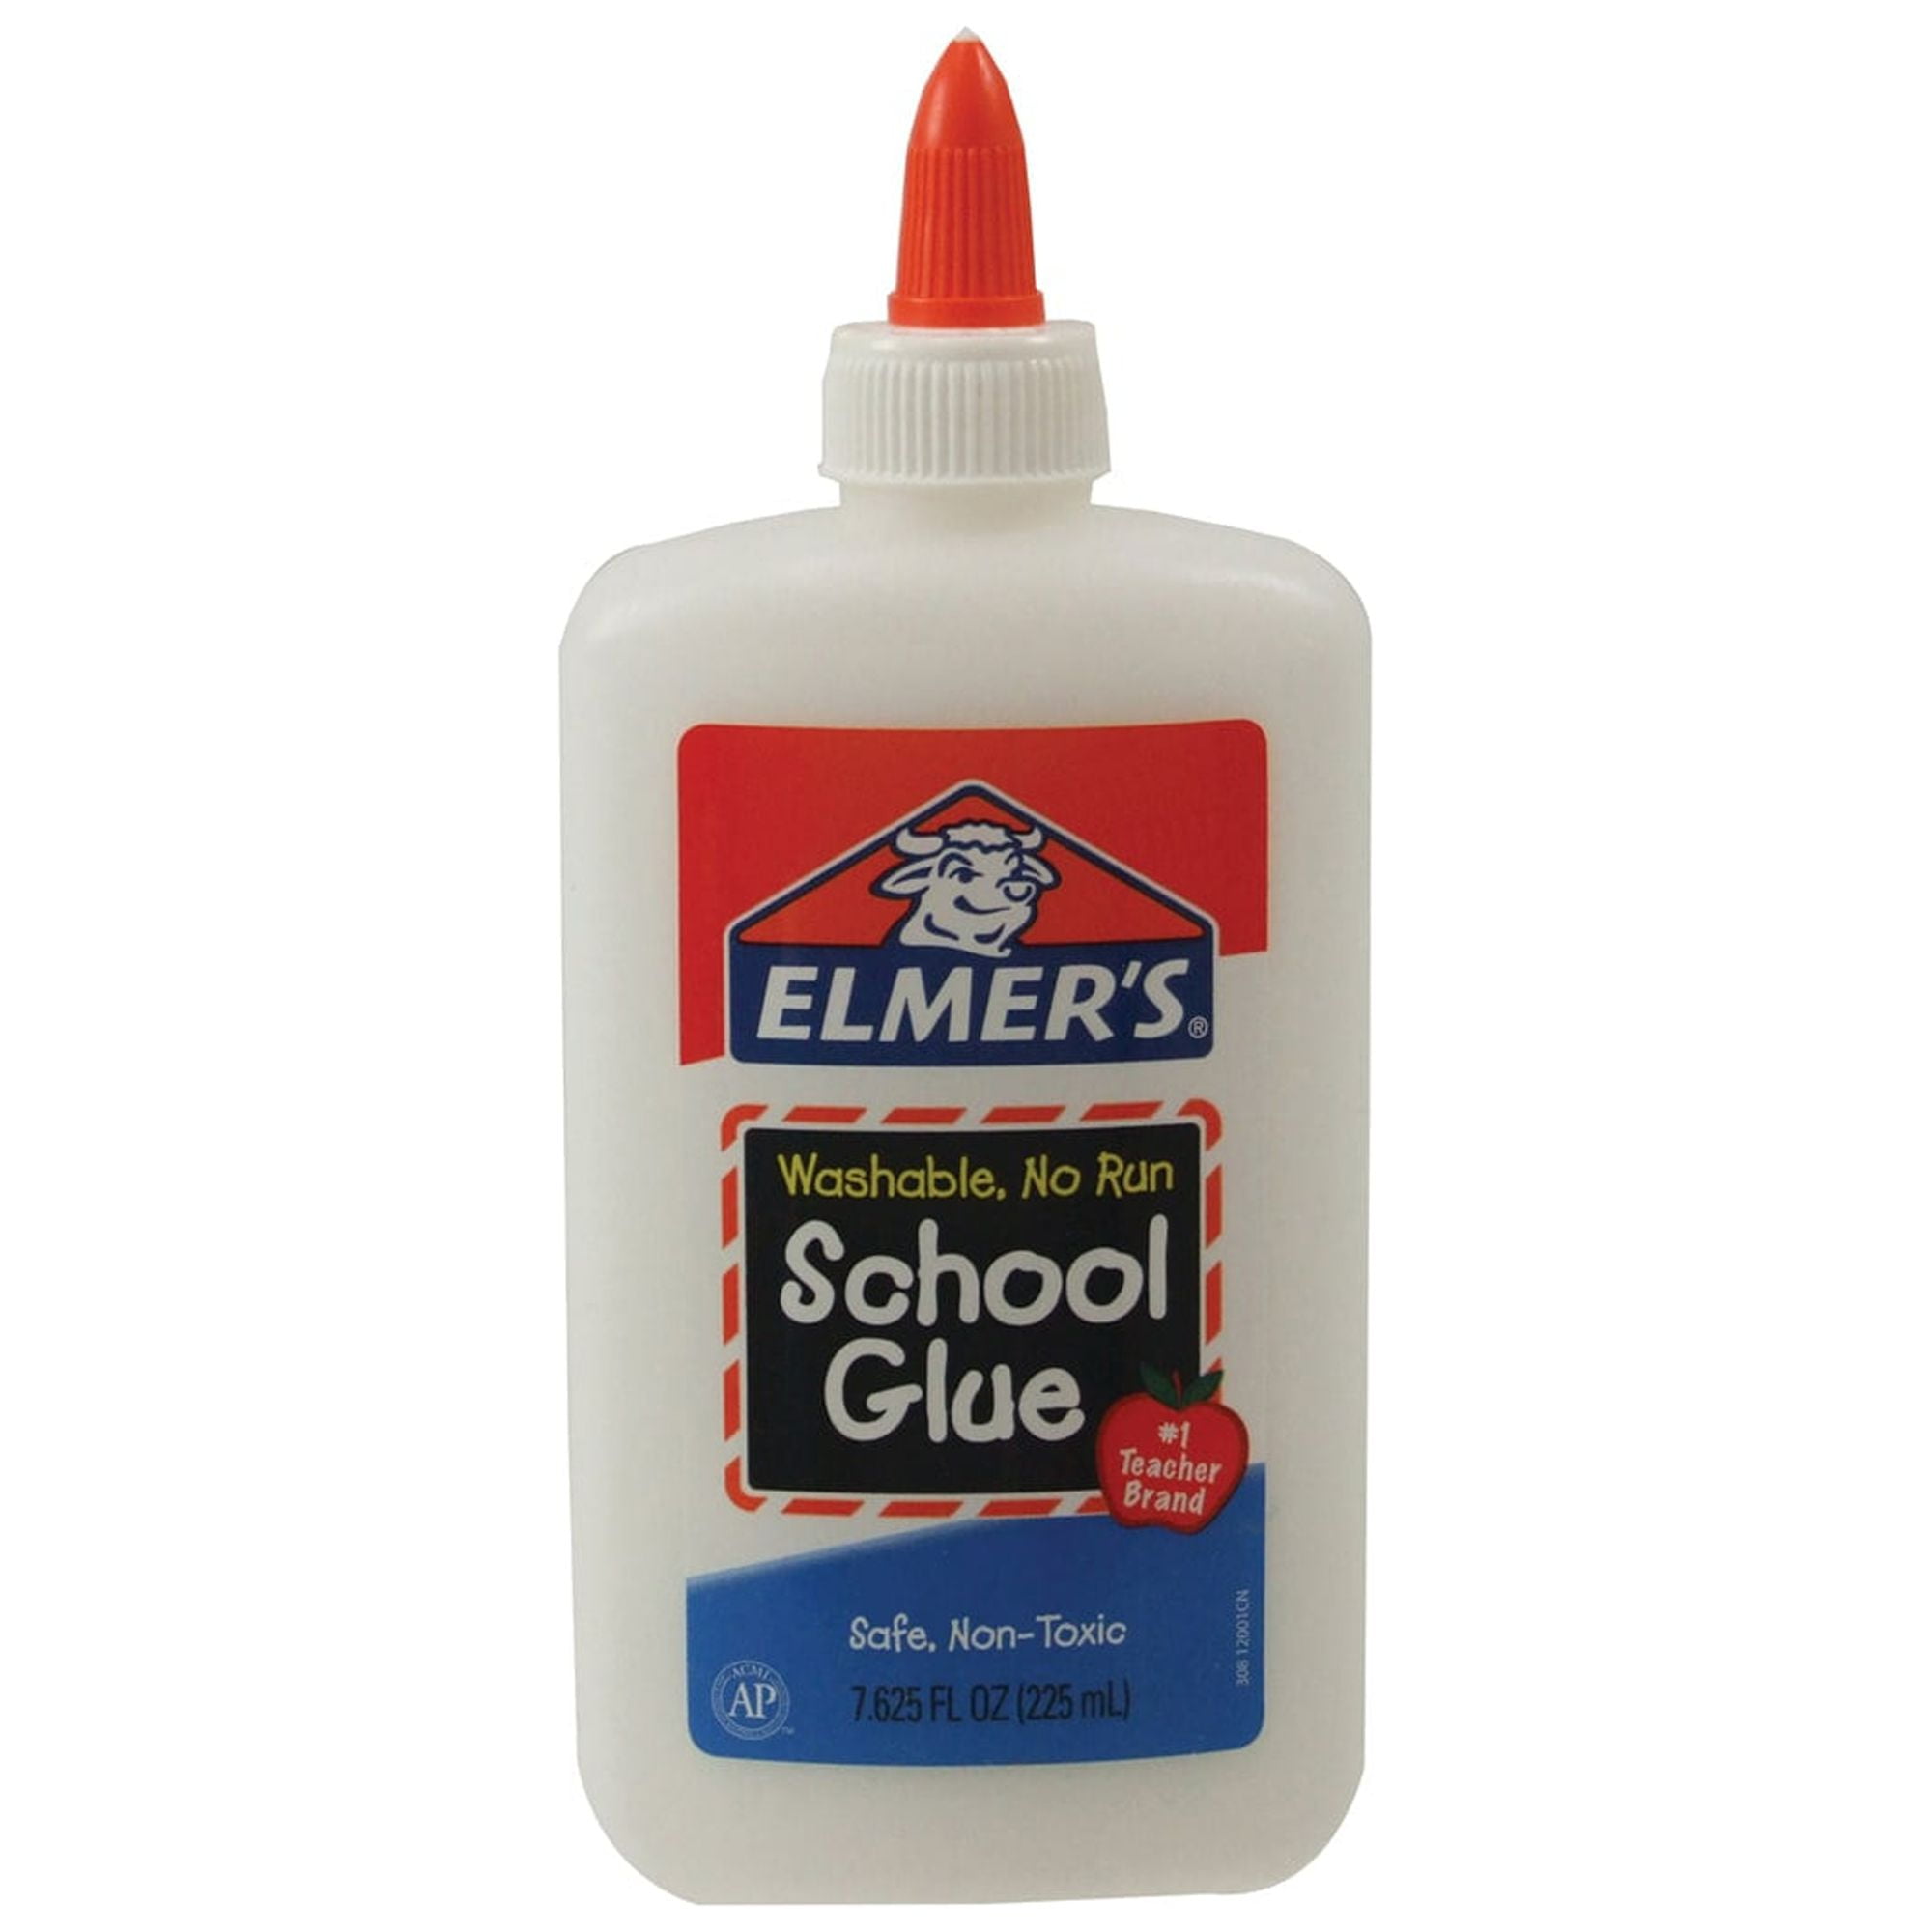 .com : Set of 2 Elmers Craft Bond Glue Pen Value Pack Glue Pens  (Presicion Tip, Clear, 2.12 Oz Total) : Arts, Crafts & Sewing